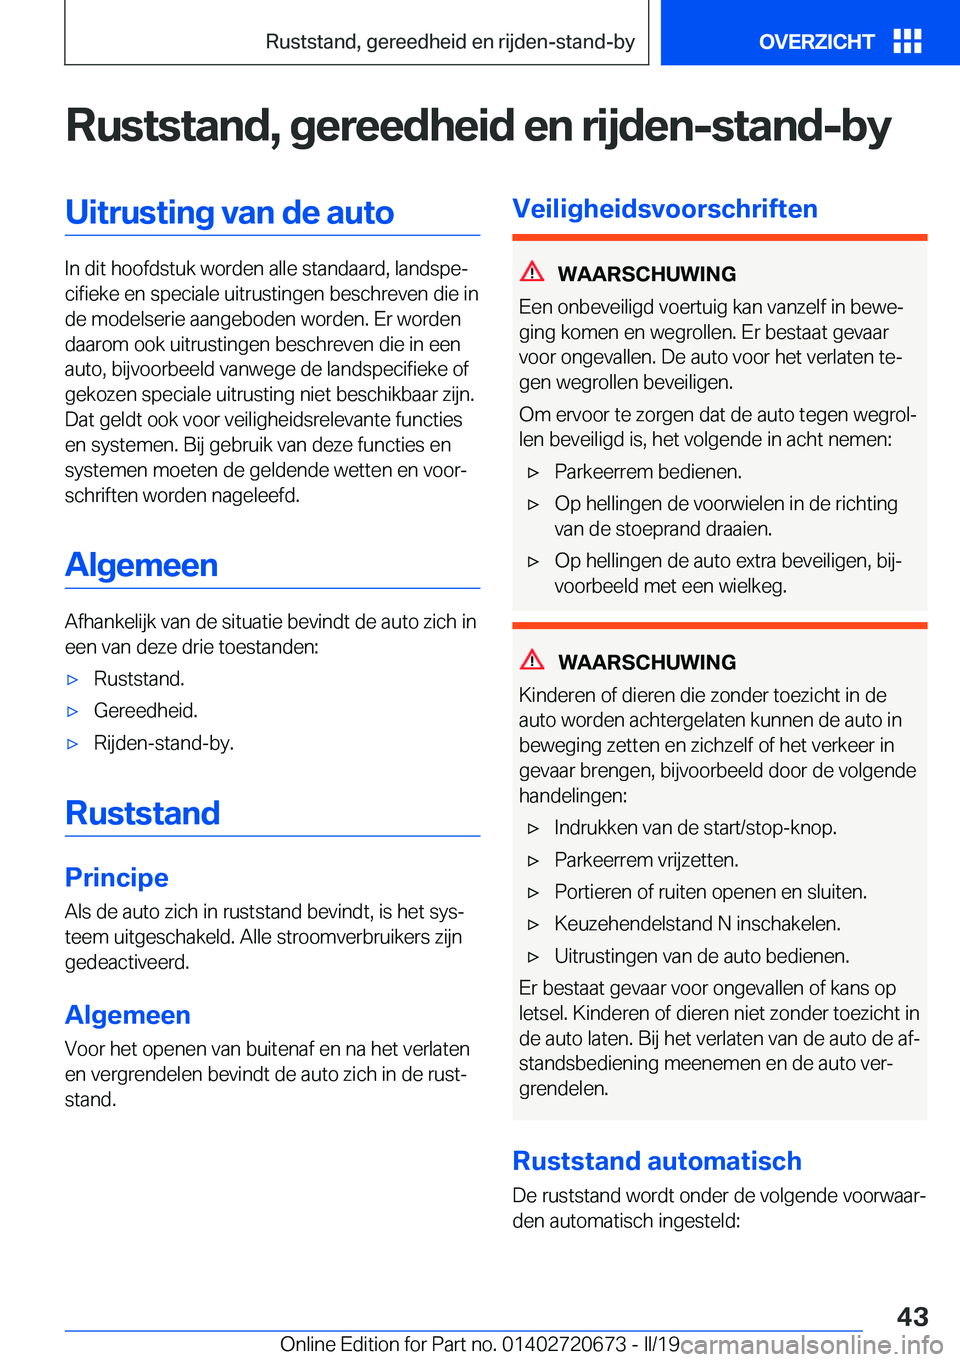 BMW M5 2019  Instructieboekjes (in Dutch) �R�u�s�t�s�t�a�n�d�,��g�e�r�e�e�d�h�e�i�d��e�n��r�i�j�d�e�n�-�s�t�a�n�d�-�b�y�U�i�t�r�u�s�t�i�n�g��v�a�n��d�e��a�u�t�o
�I�n��d�i�t��h�o�o�f�d�s�t�u�k��w�o�r�d�e�n��a�l�l�e��s�t�a�n�d�a�a�r�